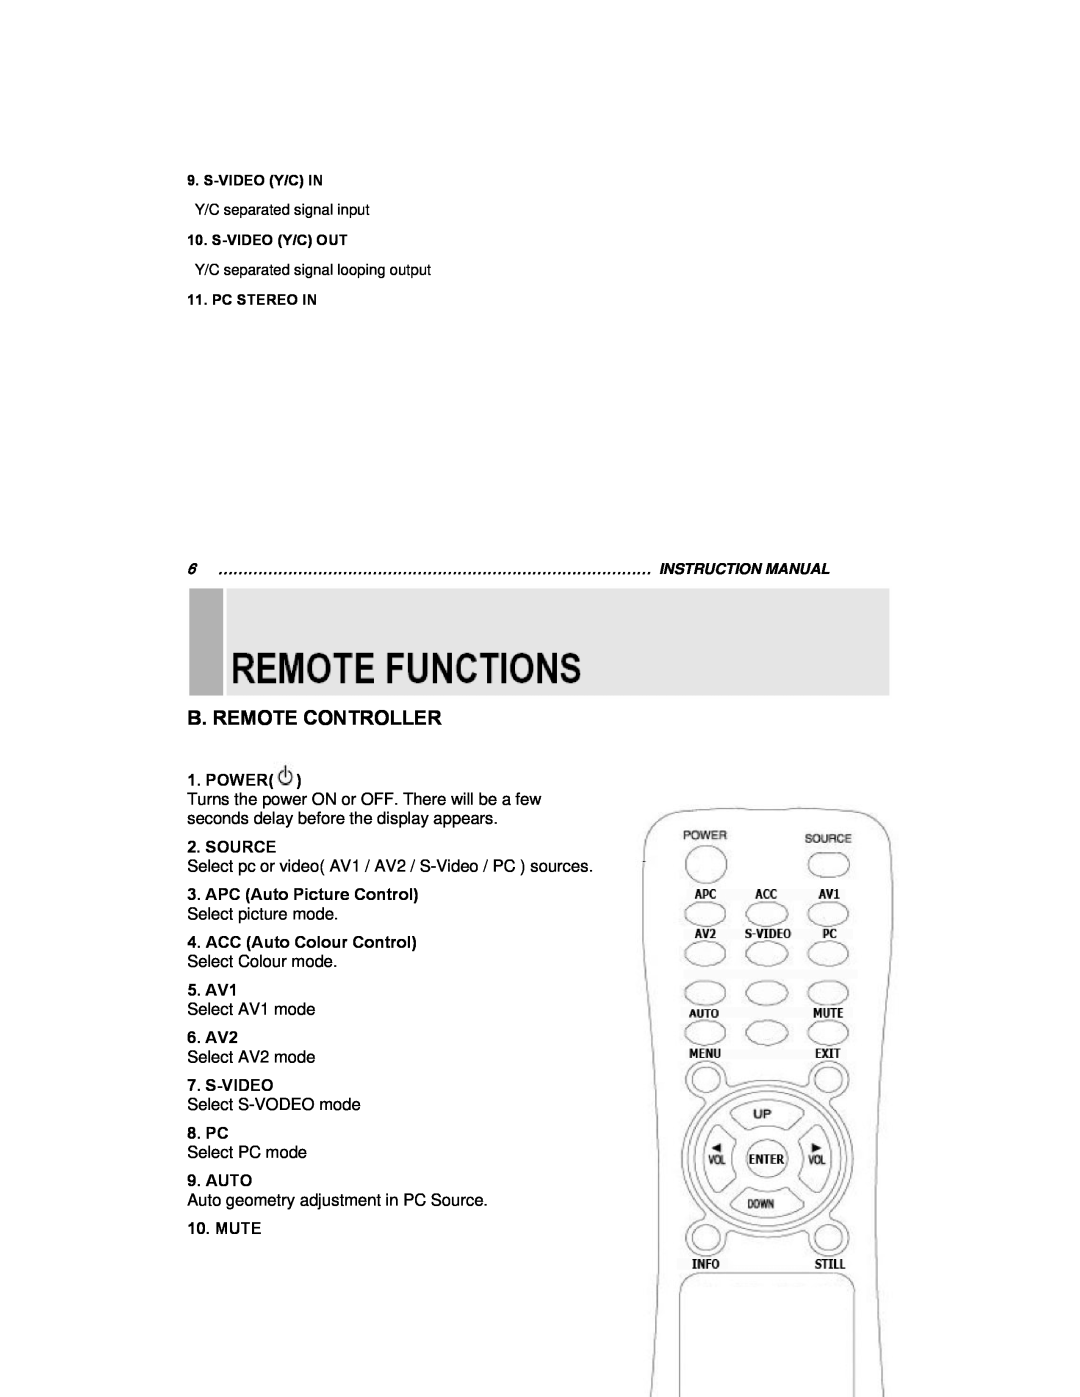 EverFocus EN-7515C B. Remote Controller, Power, Source, APC Auto Picture Control Select picture mode, 6. AV2, S-Video 